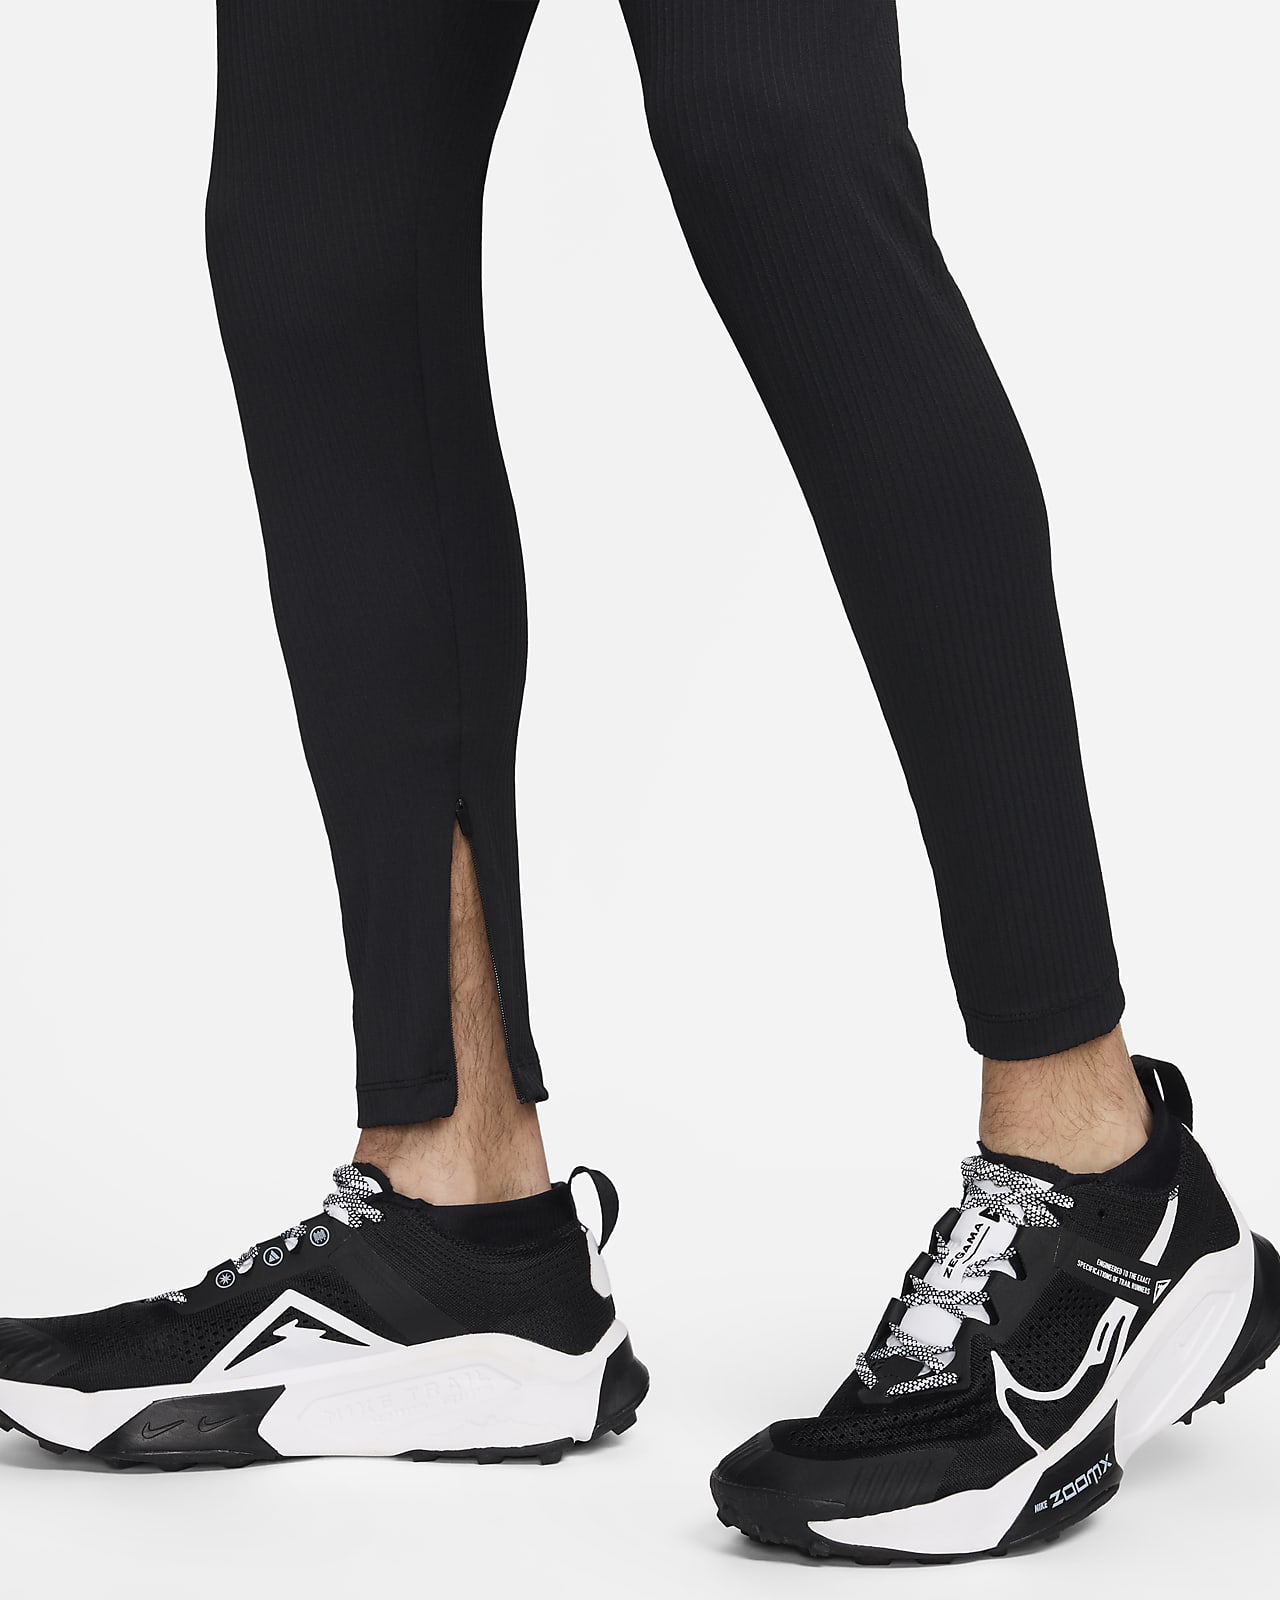 Nike Aeroswift 1/2 Tights Running Shorts - Men's Large $90.00 CJ7843 010  Black